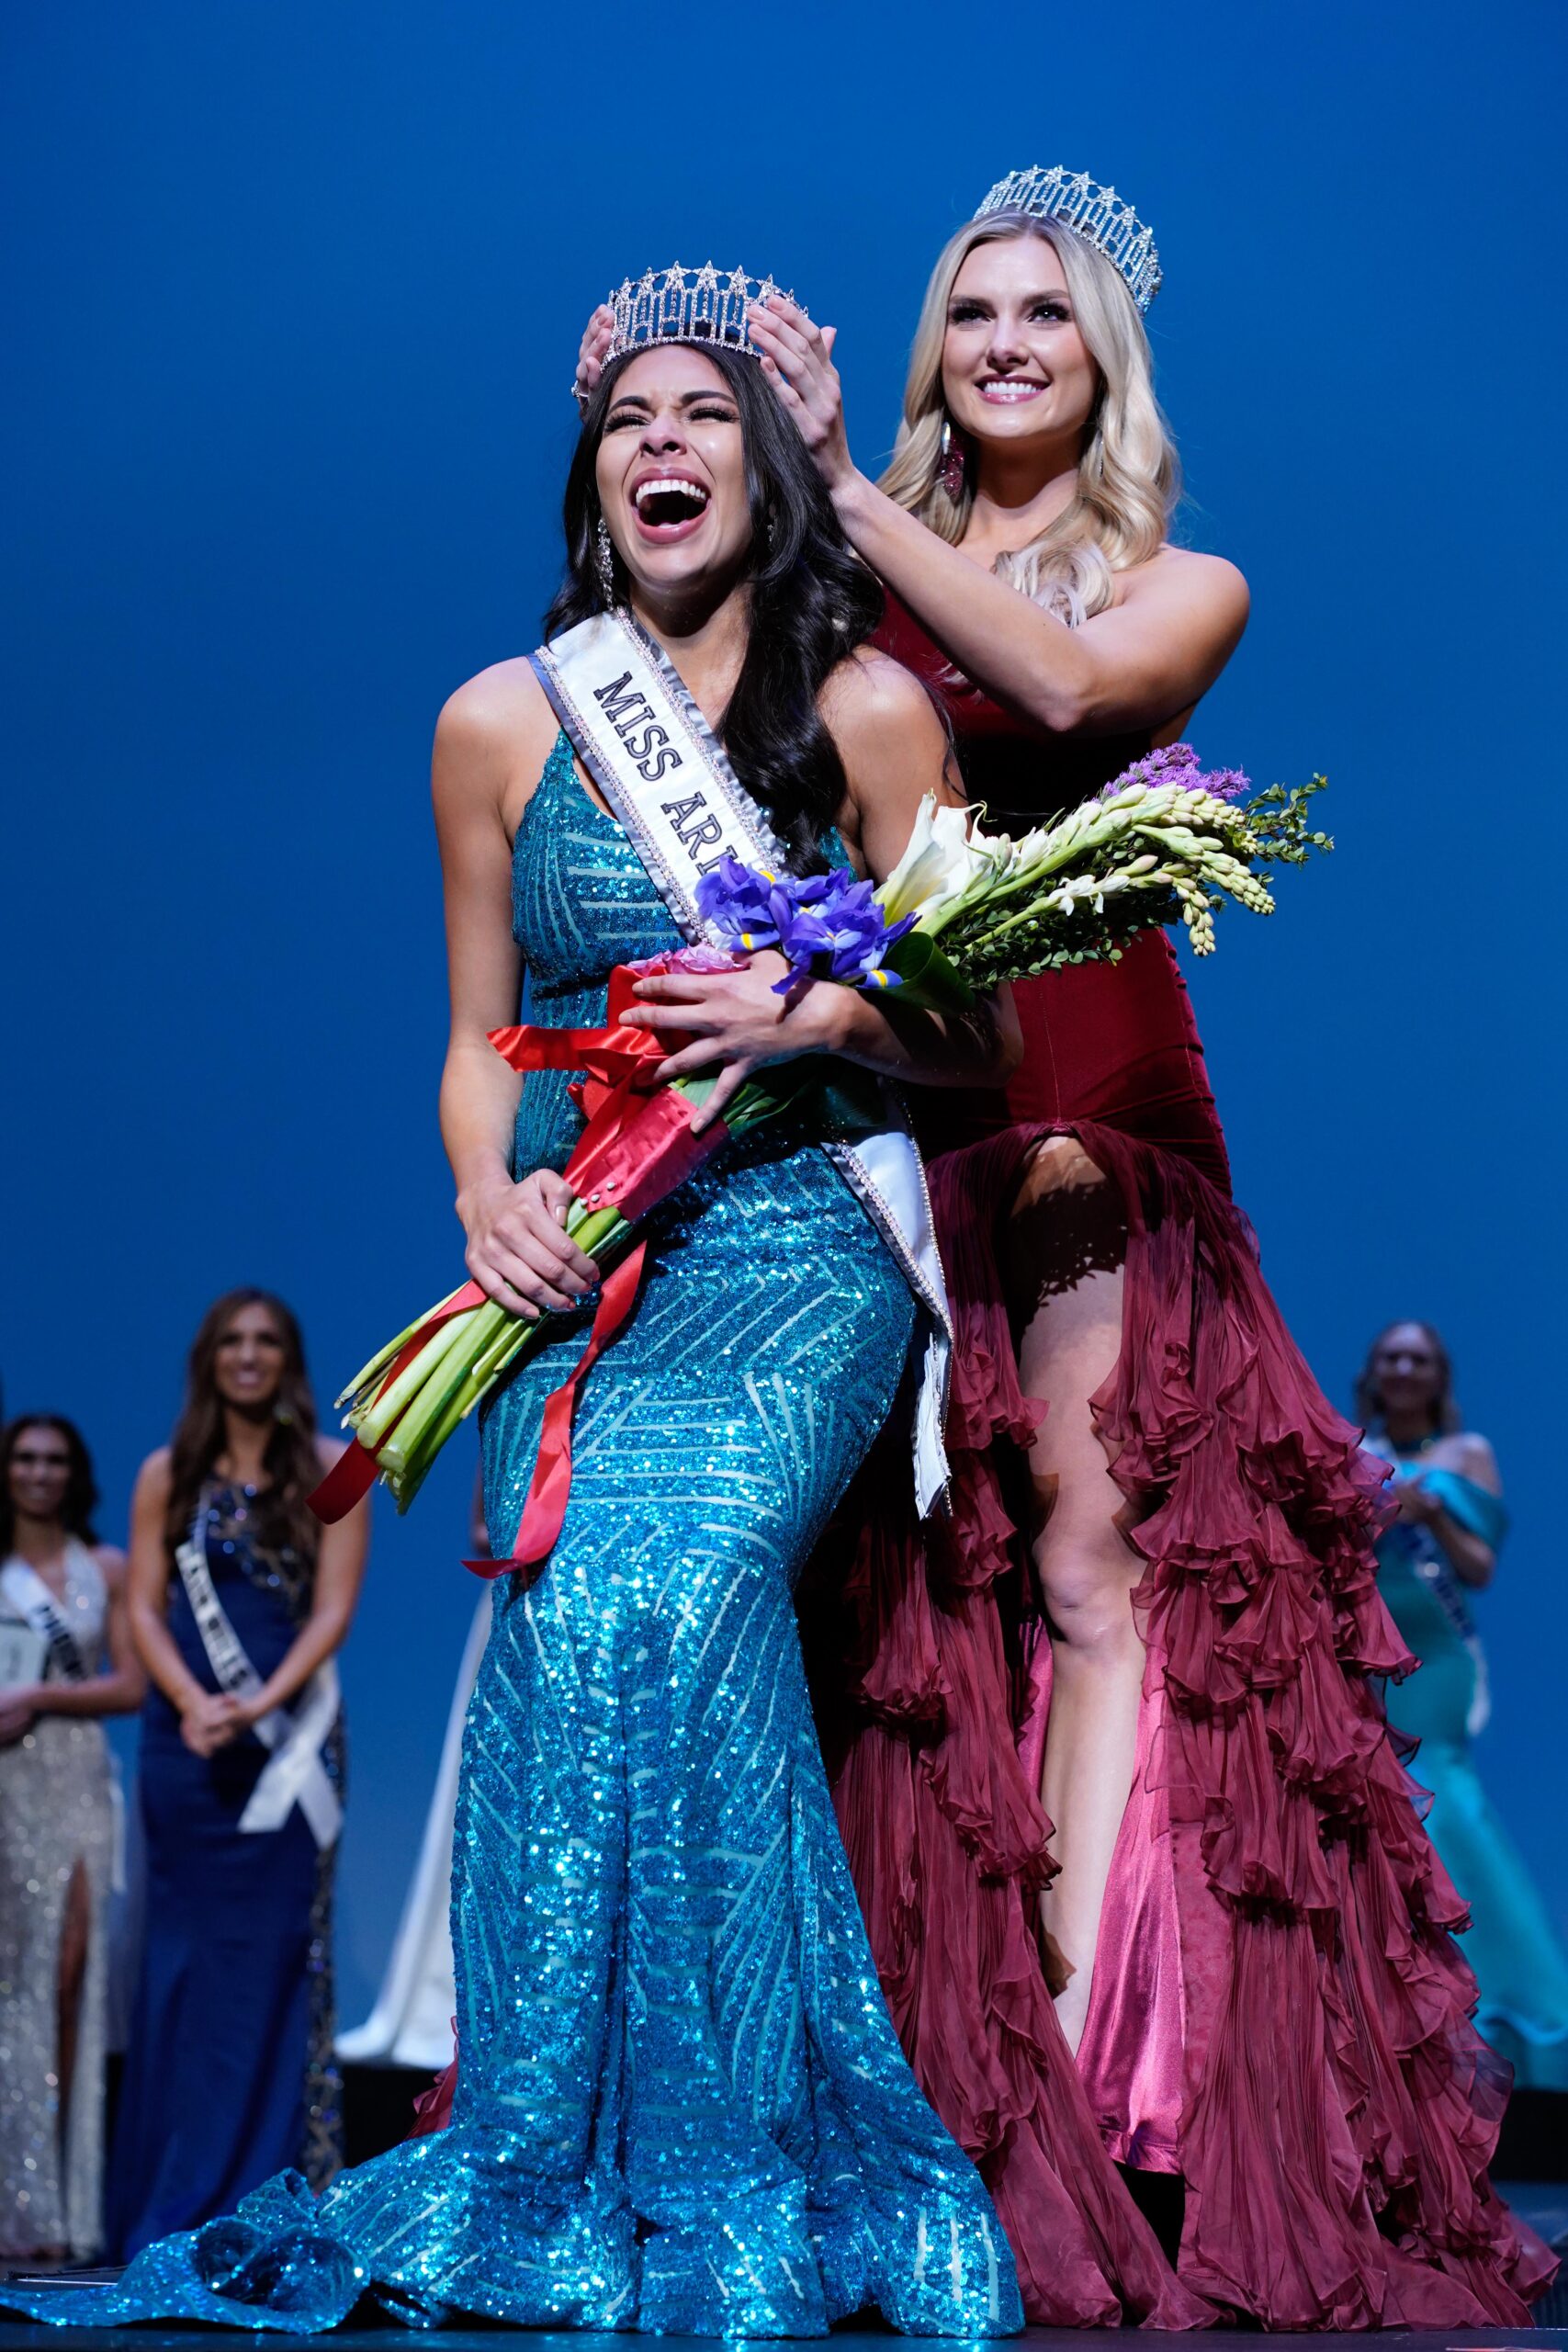 Yesenia Vidales is crowned Miss Arizona USA 2020